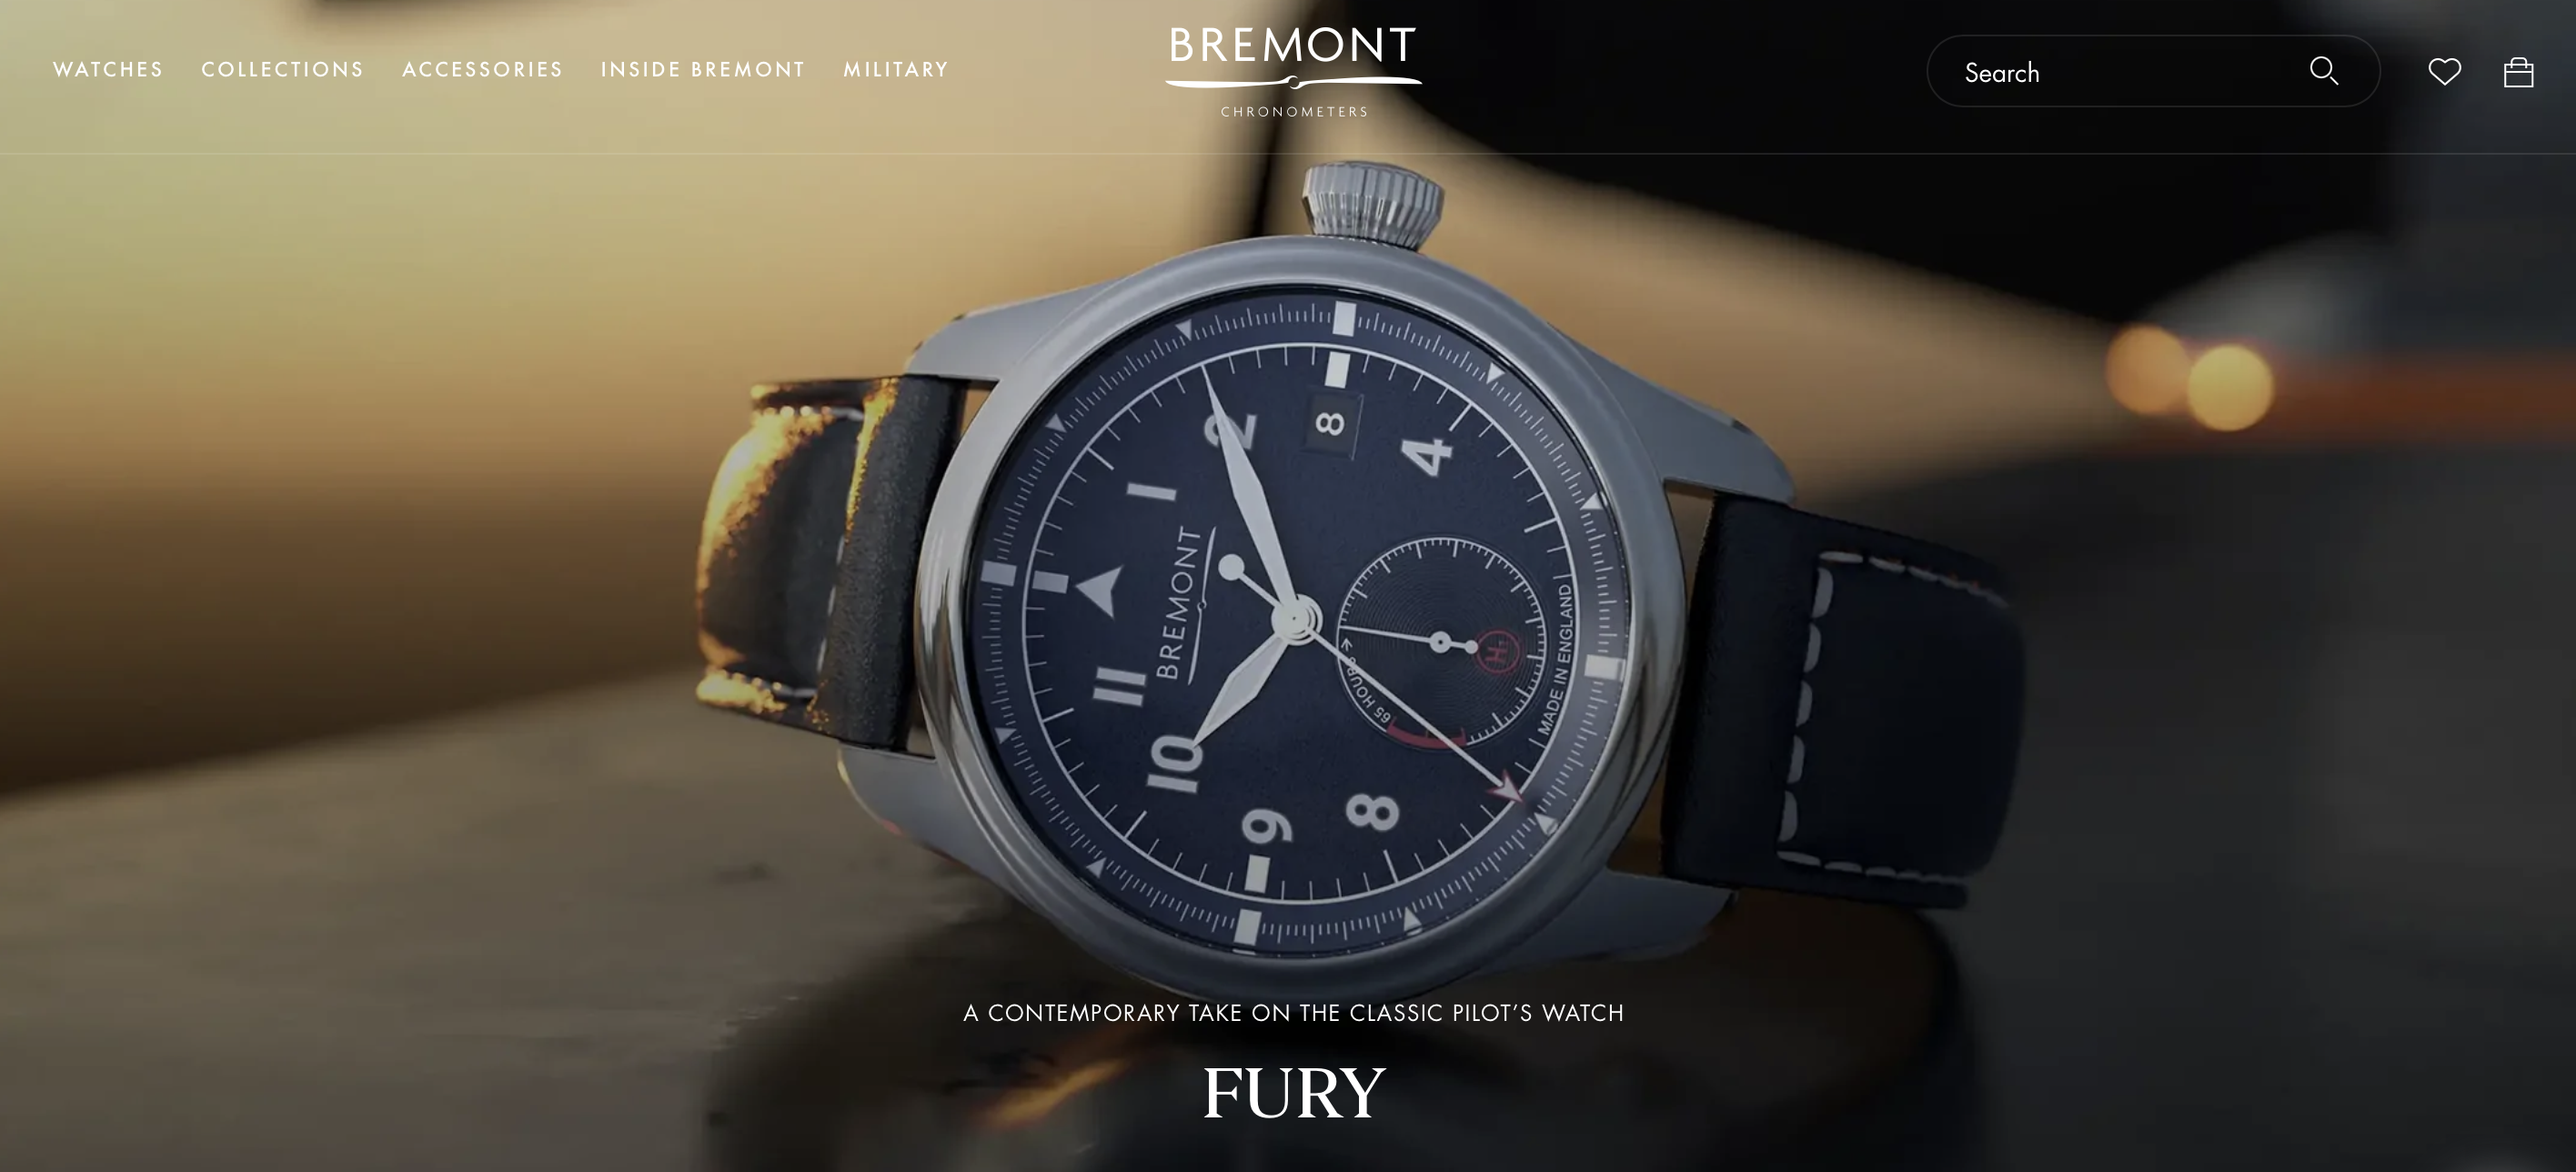 British Watch Brand Bremont Raises £48.4 Million With Bill Ackman’s Backing